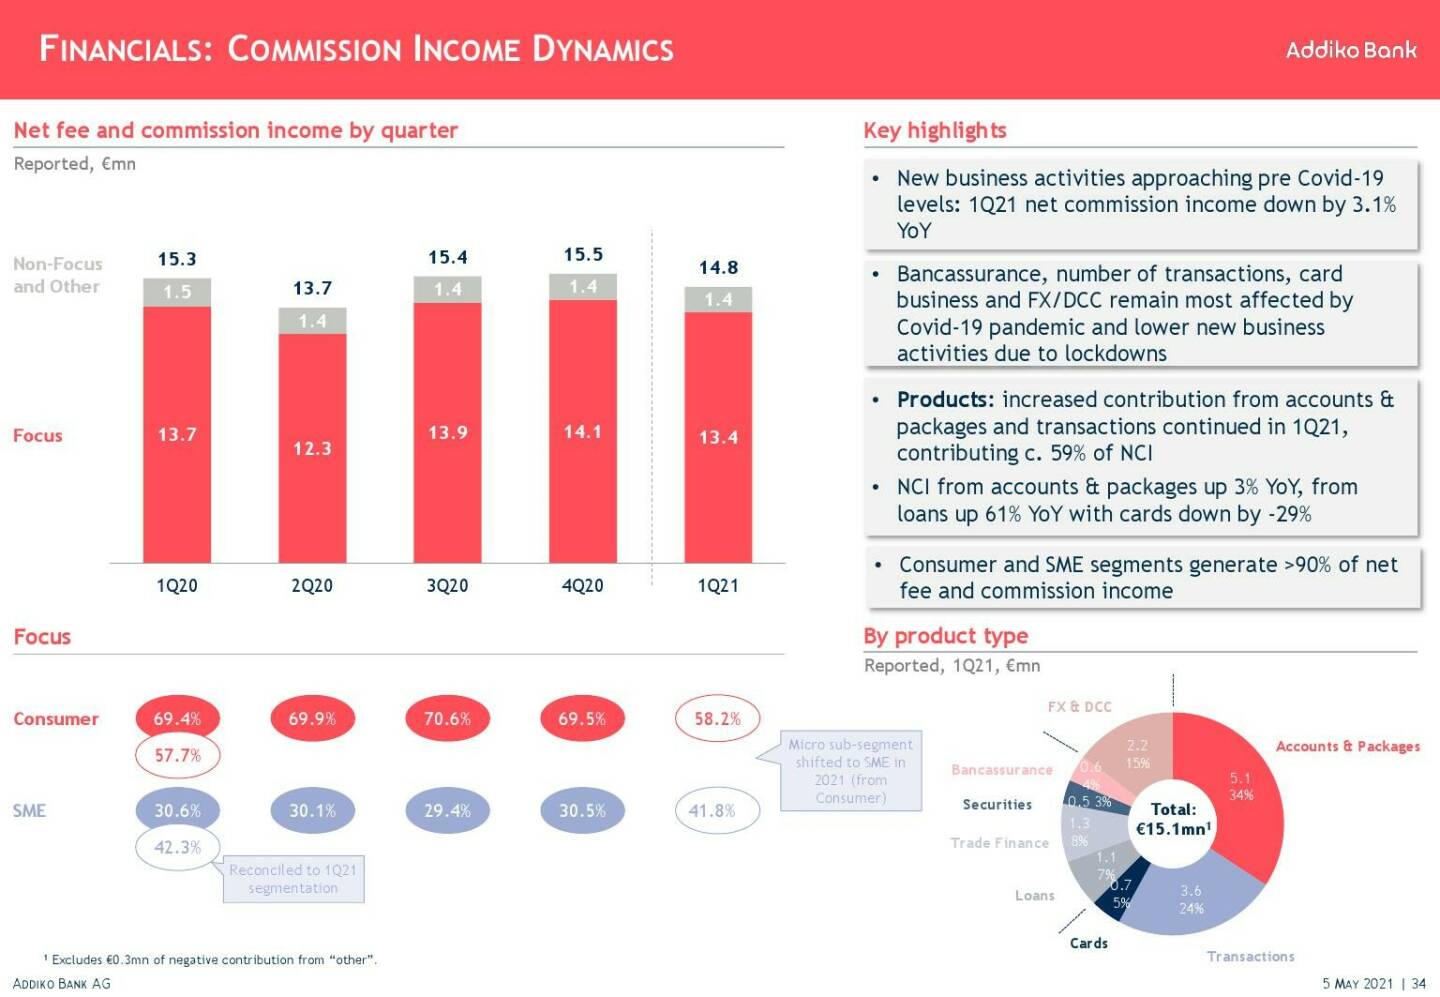 Addiko - Financials: Commission income dynamics 